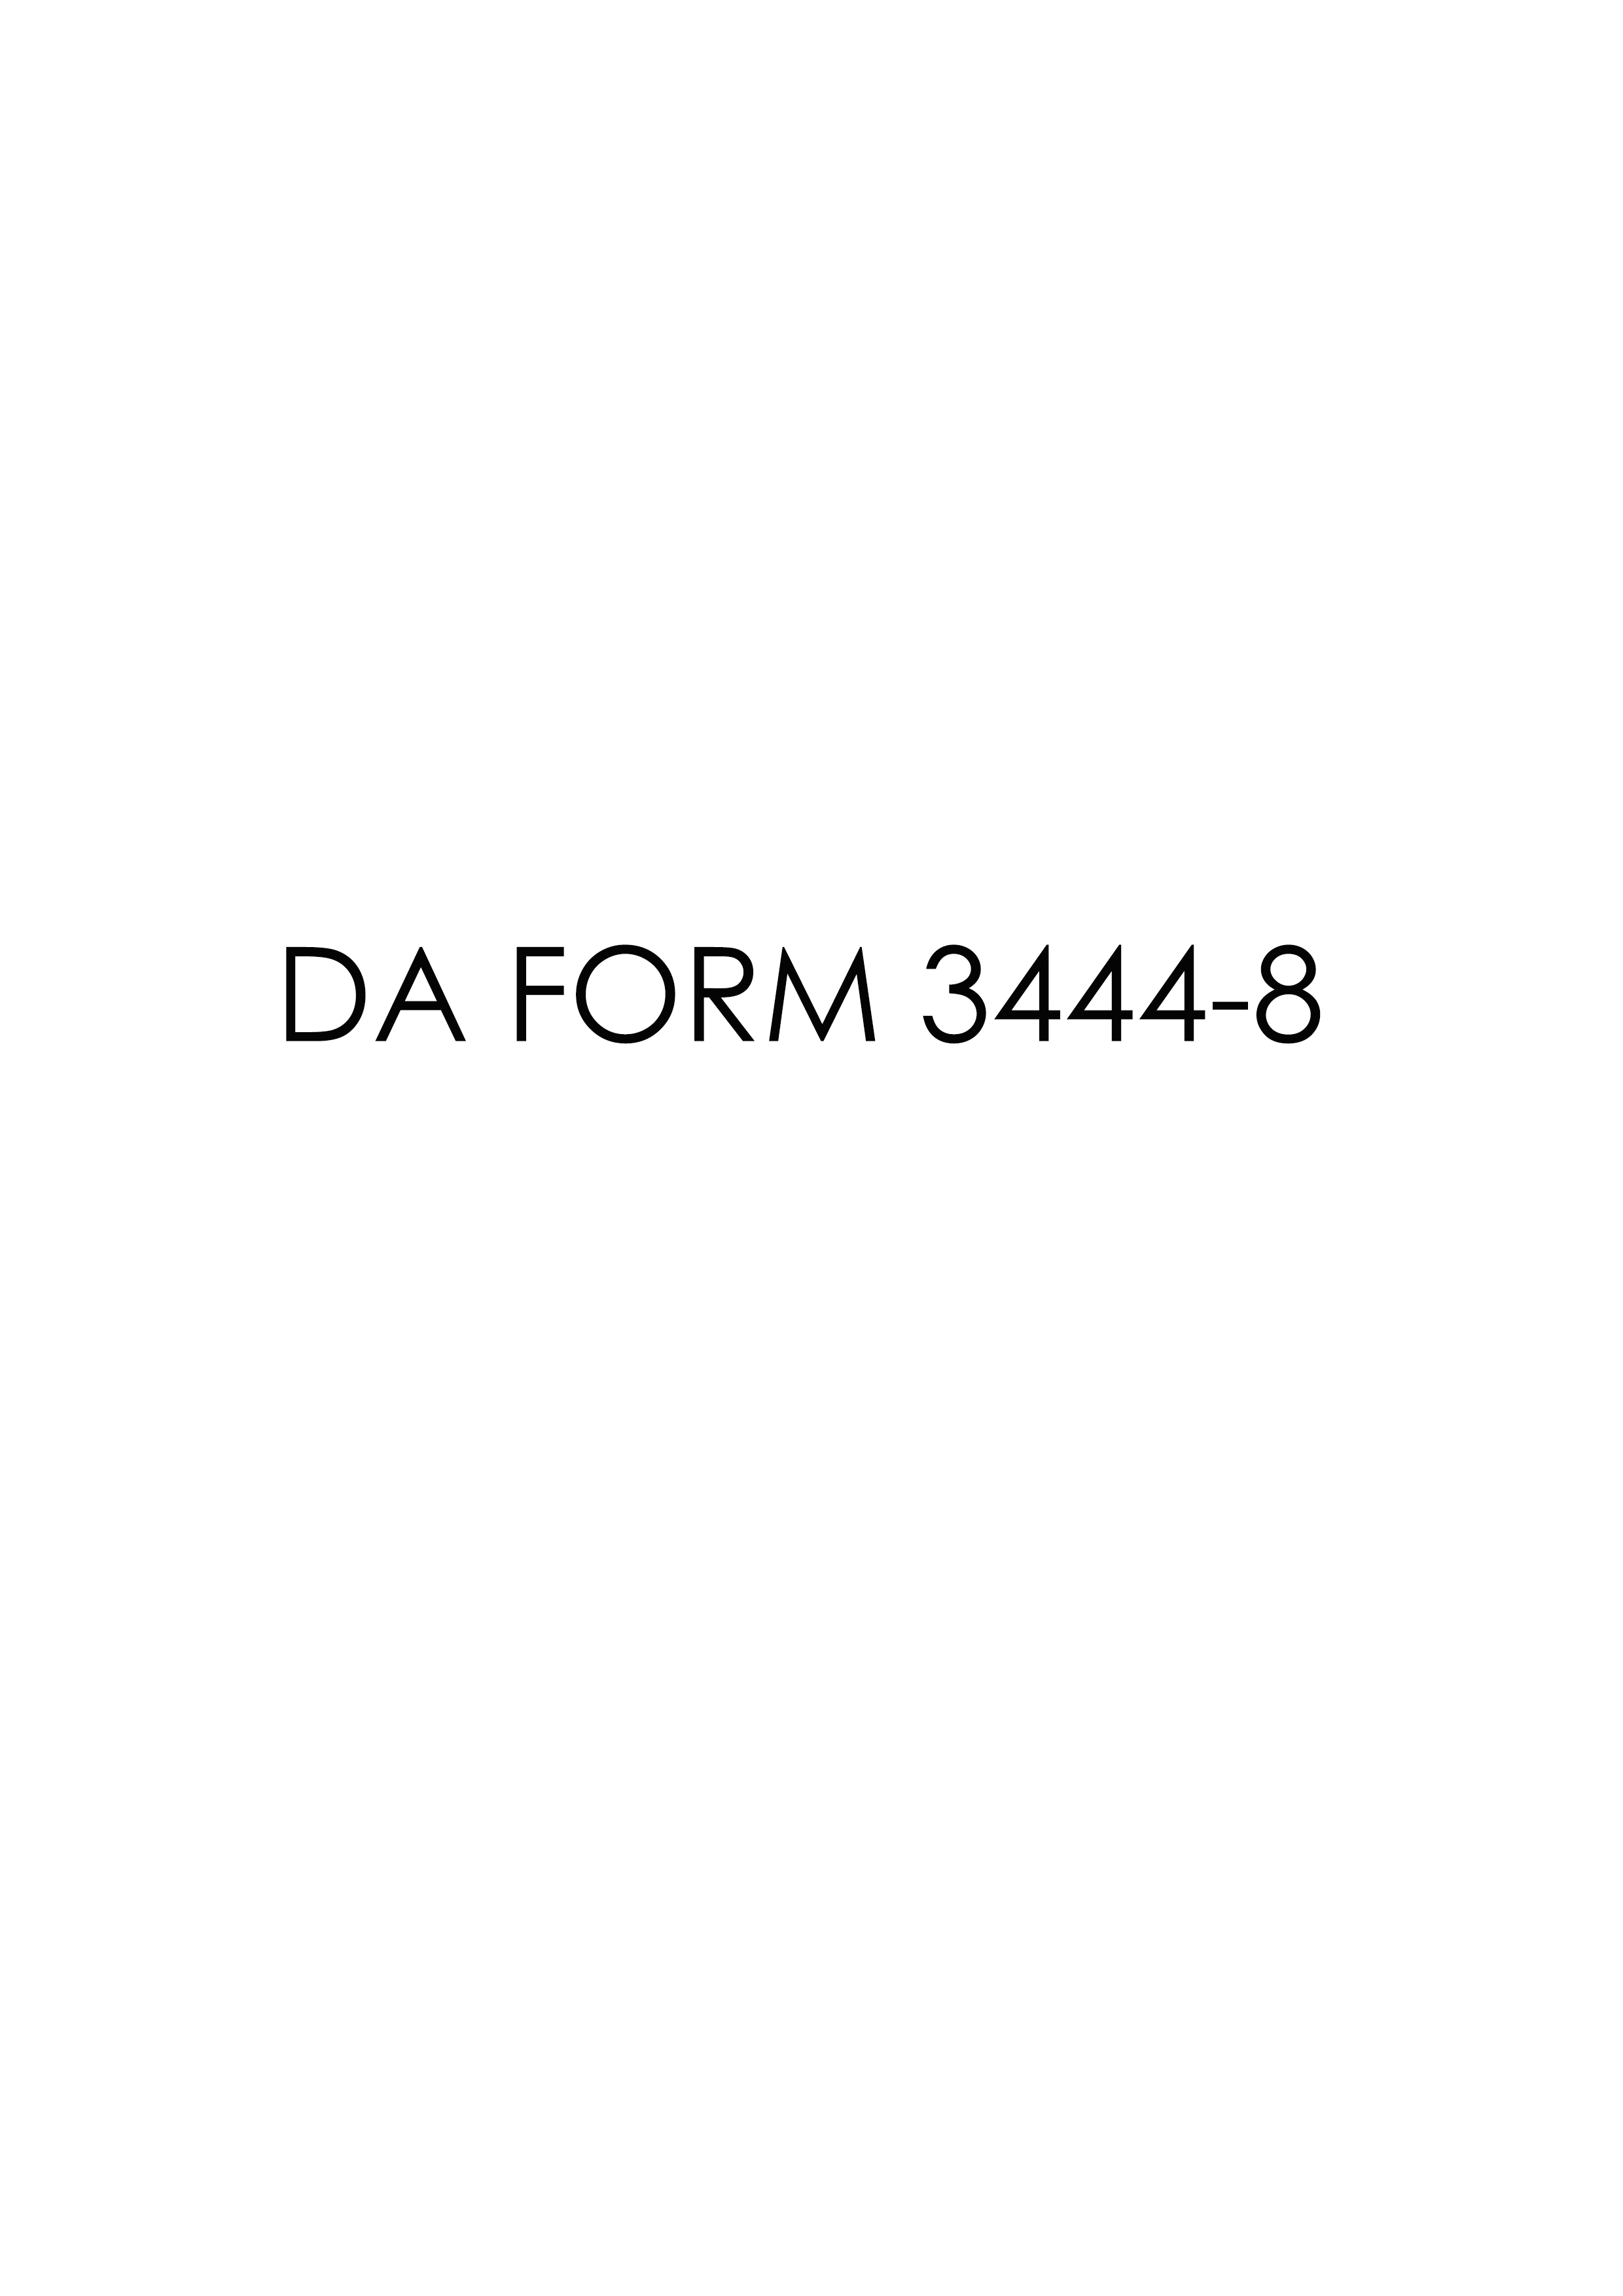 da Form 3444-8 fillable